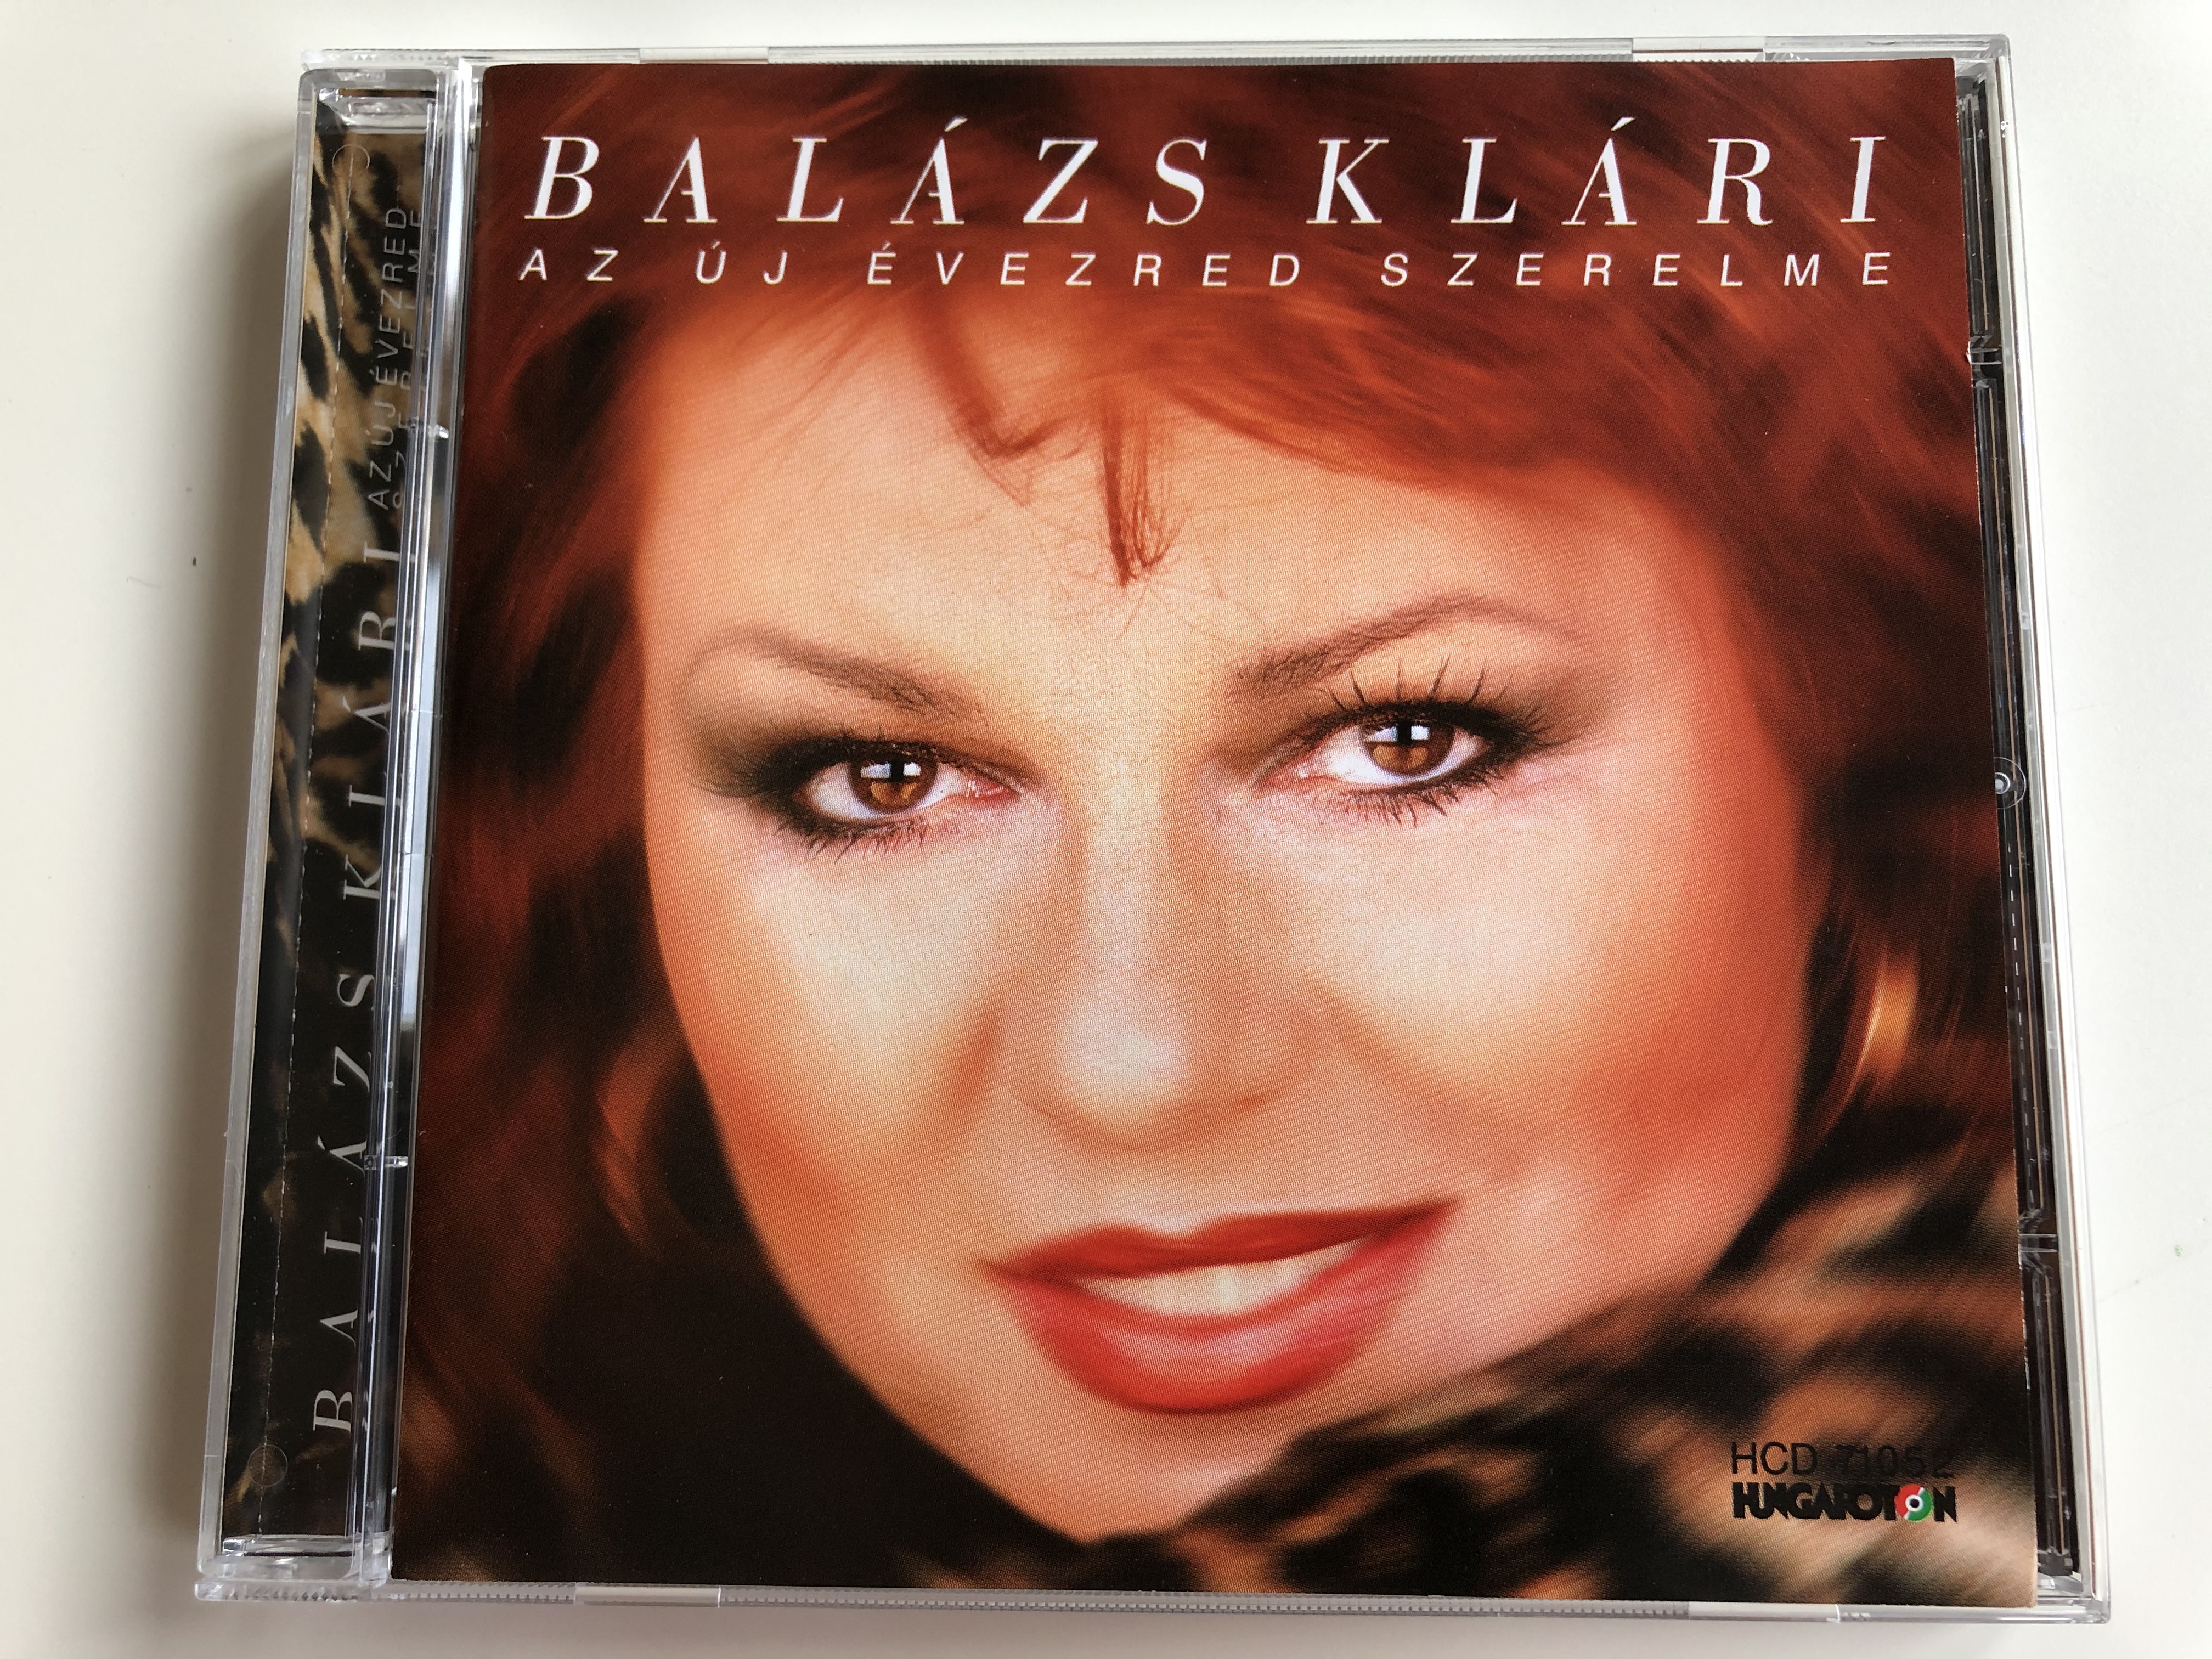 bal-zs-kl-ri-az-j-vezred-szerelme-hungaroton-audio-cd-2000-hcd-71052-1-.jpg